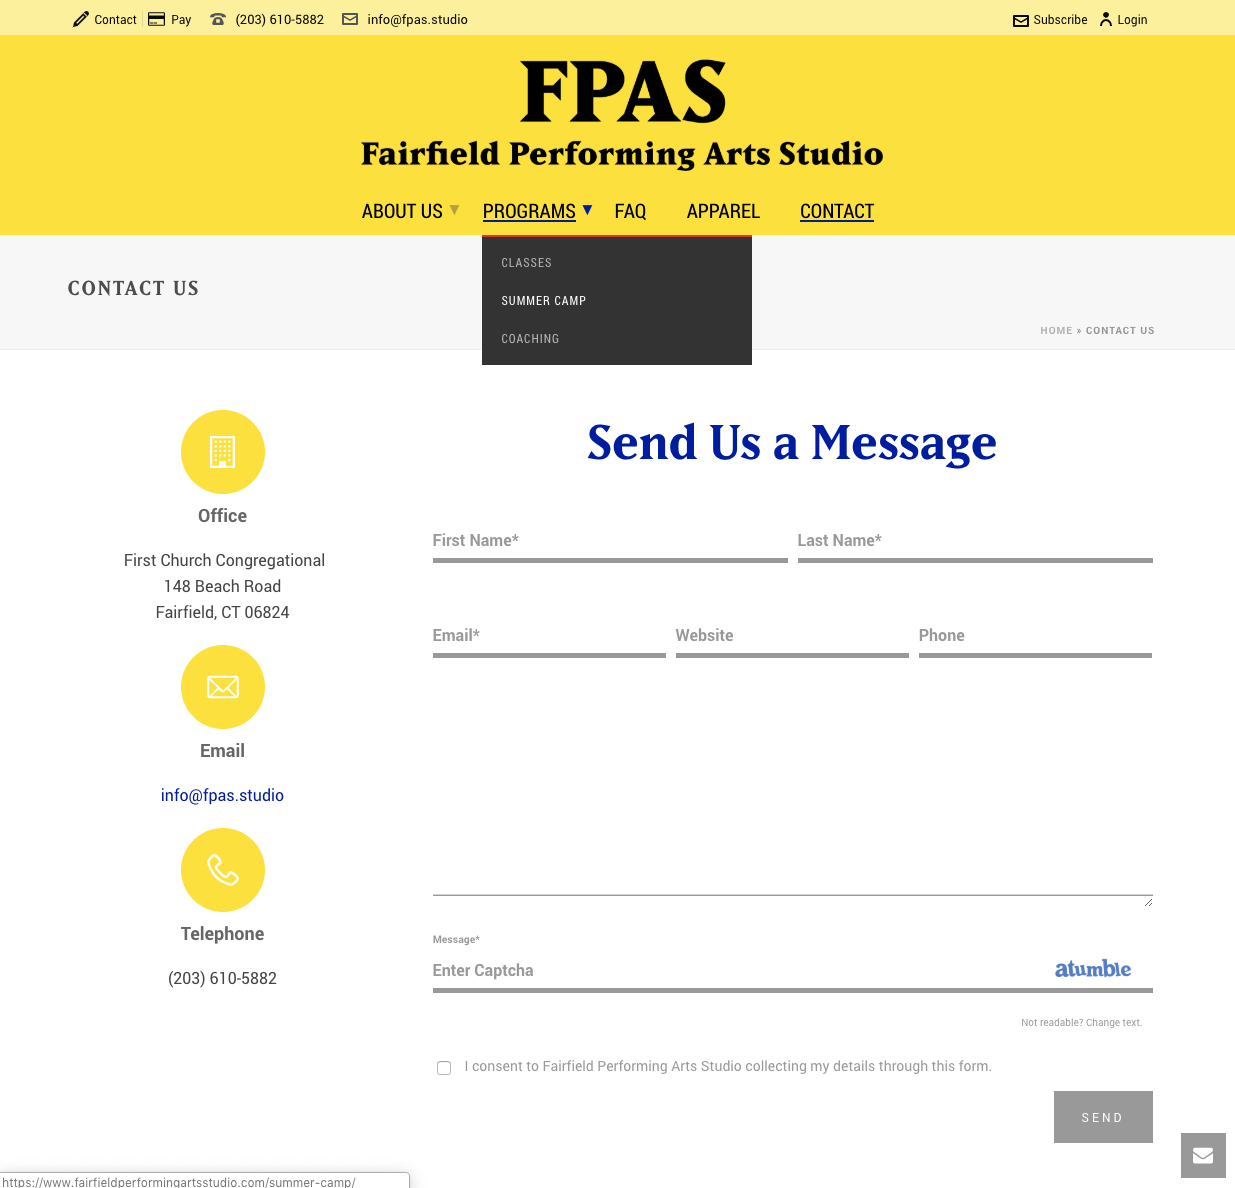 FPAS Contact